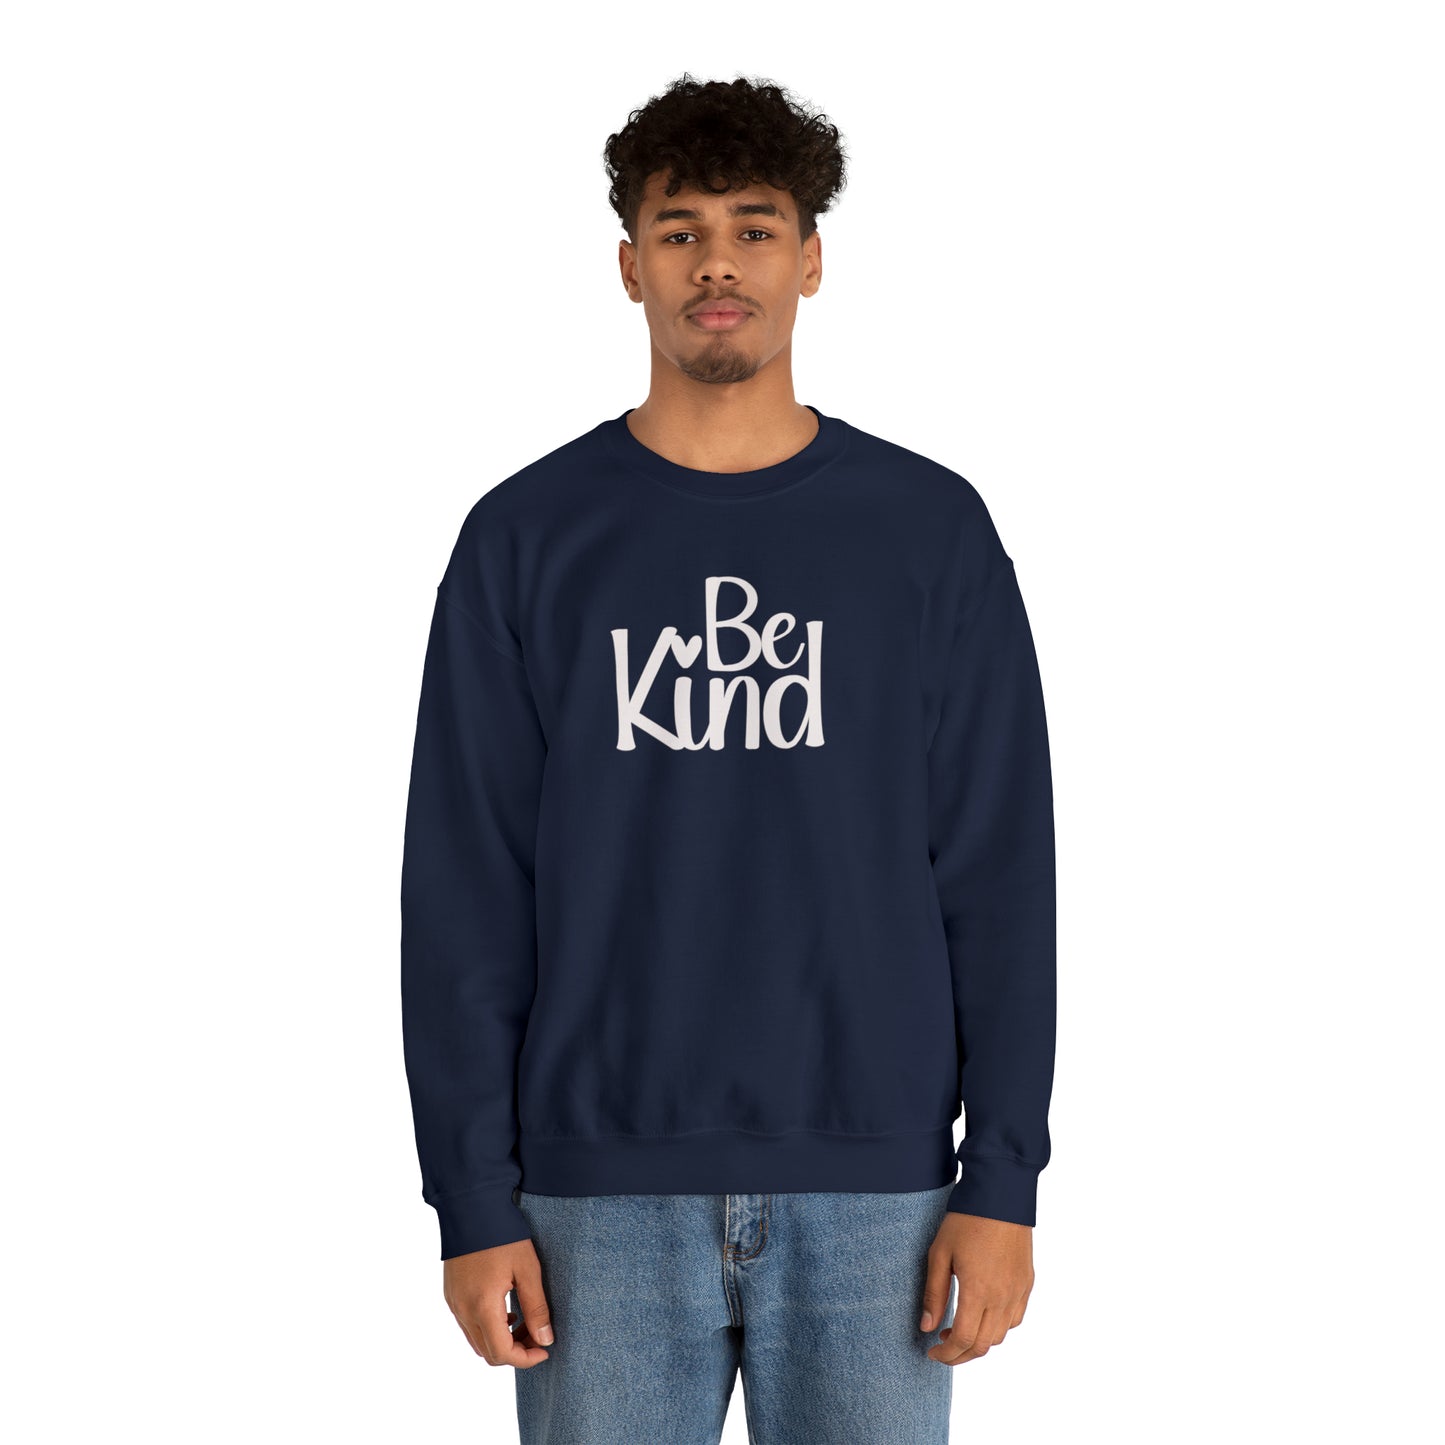 Be Kind Motivational Sweatshirt, Inspirational Shirt, Kindness Shirt